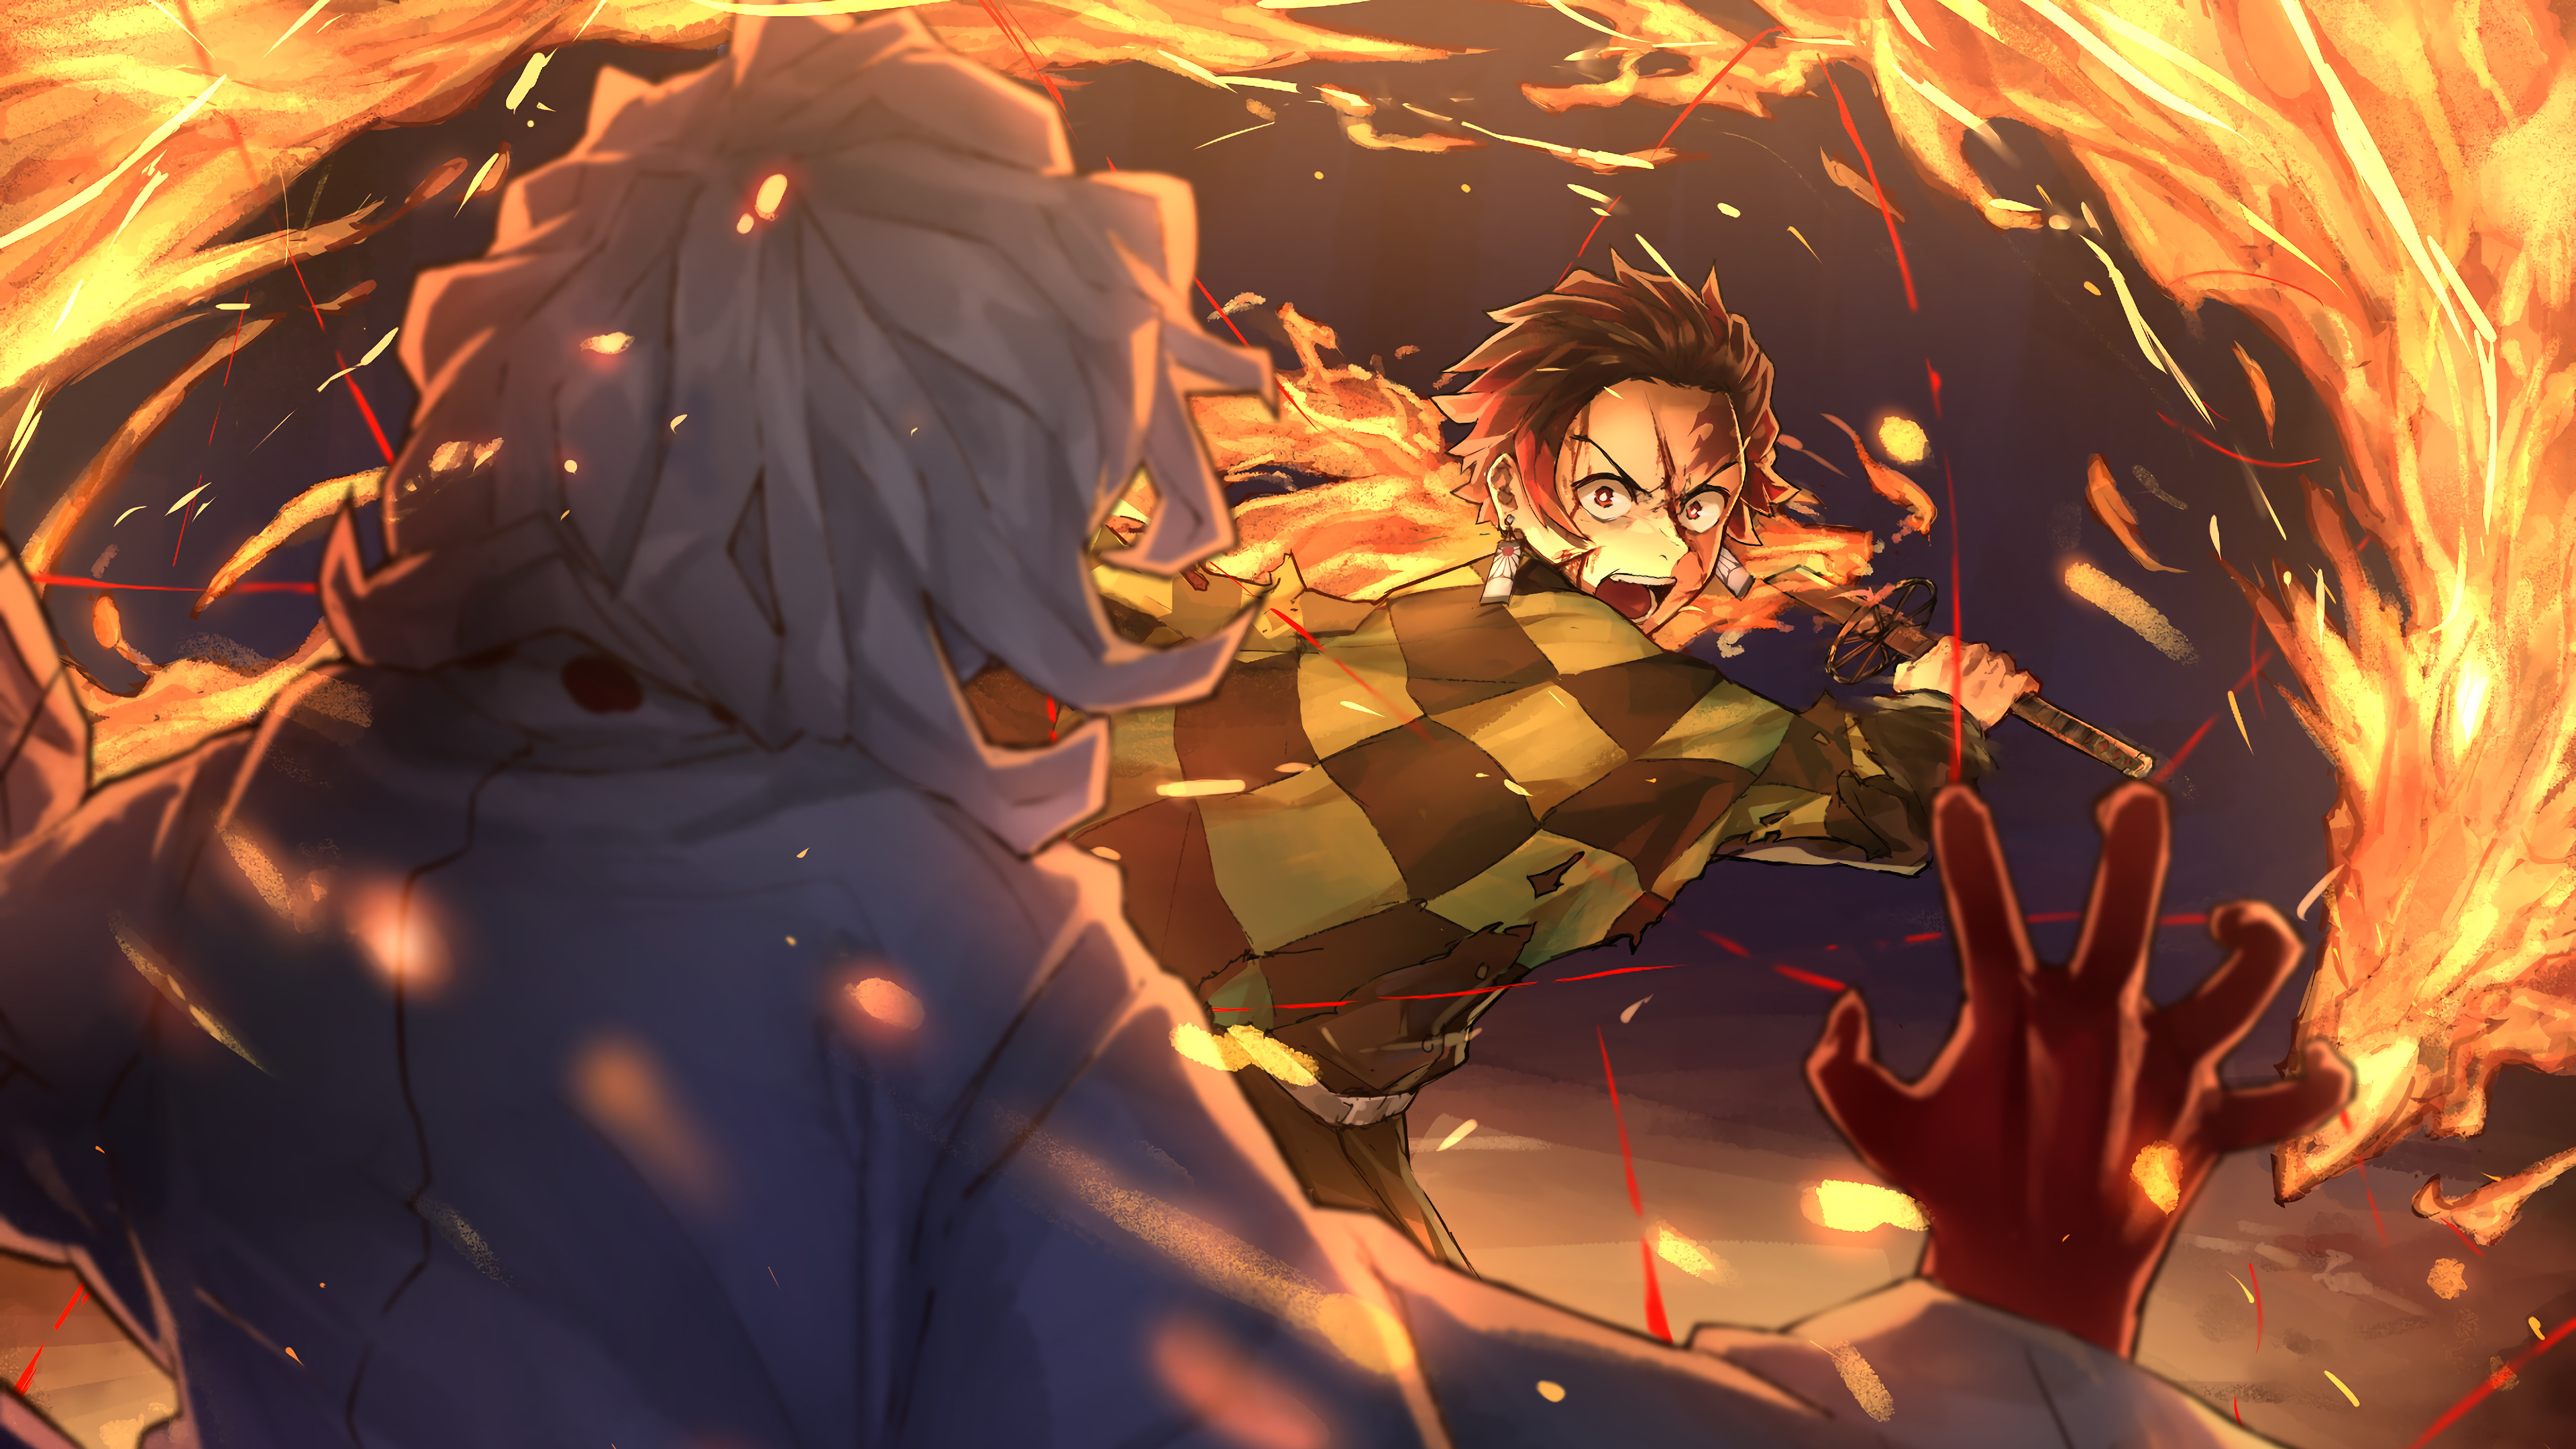 Anime 3840x2160 Kimetsu no Yaiba anime digital art artwork Kamado Tanjiro battle anime boys fire katana demon